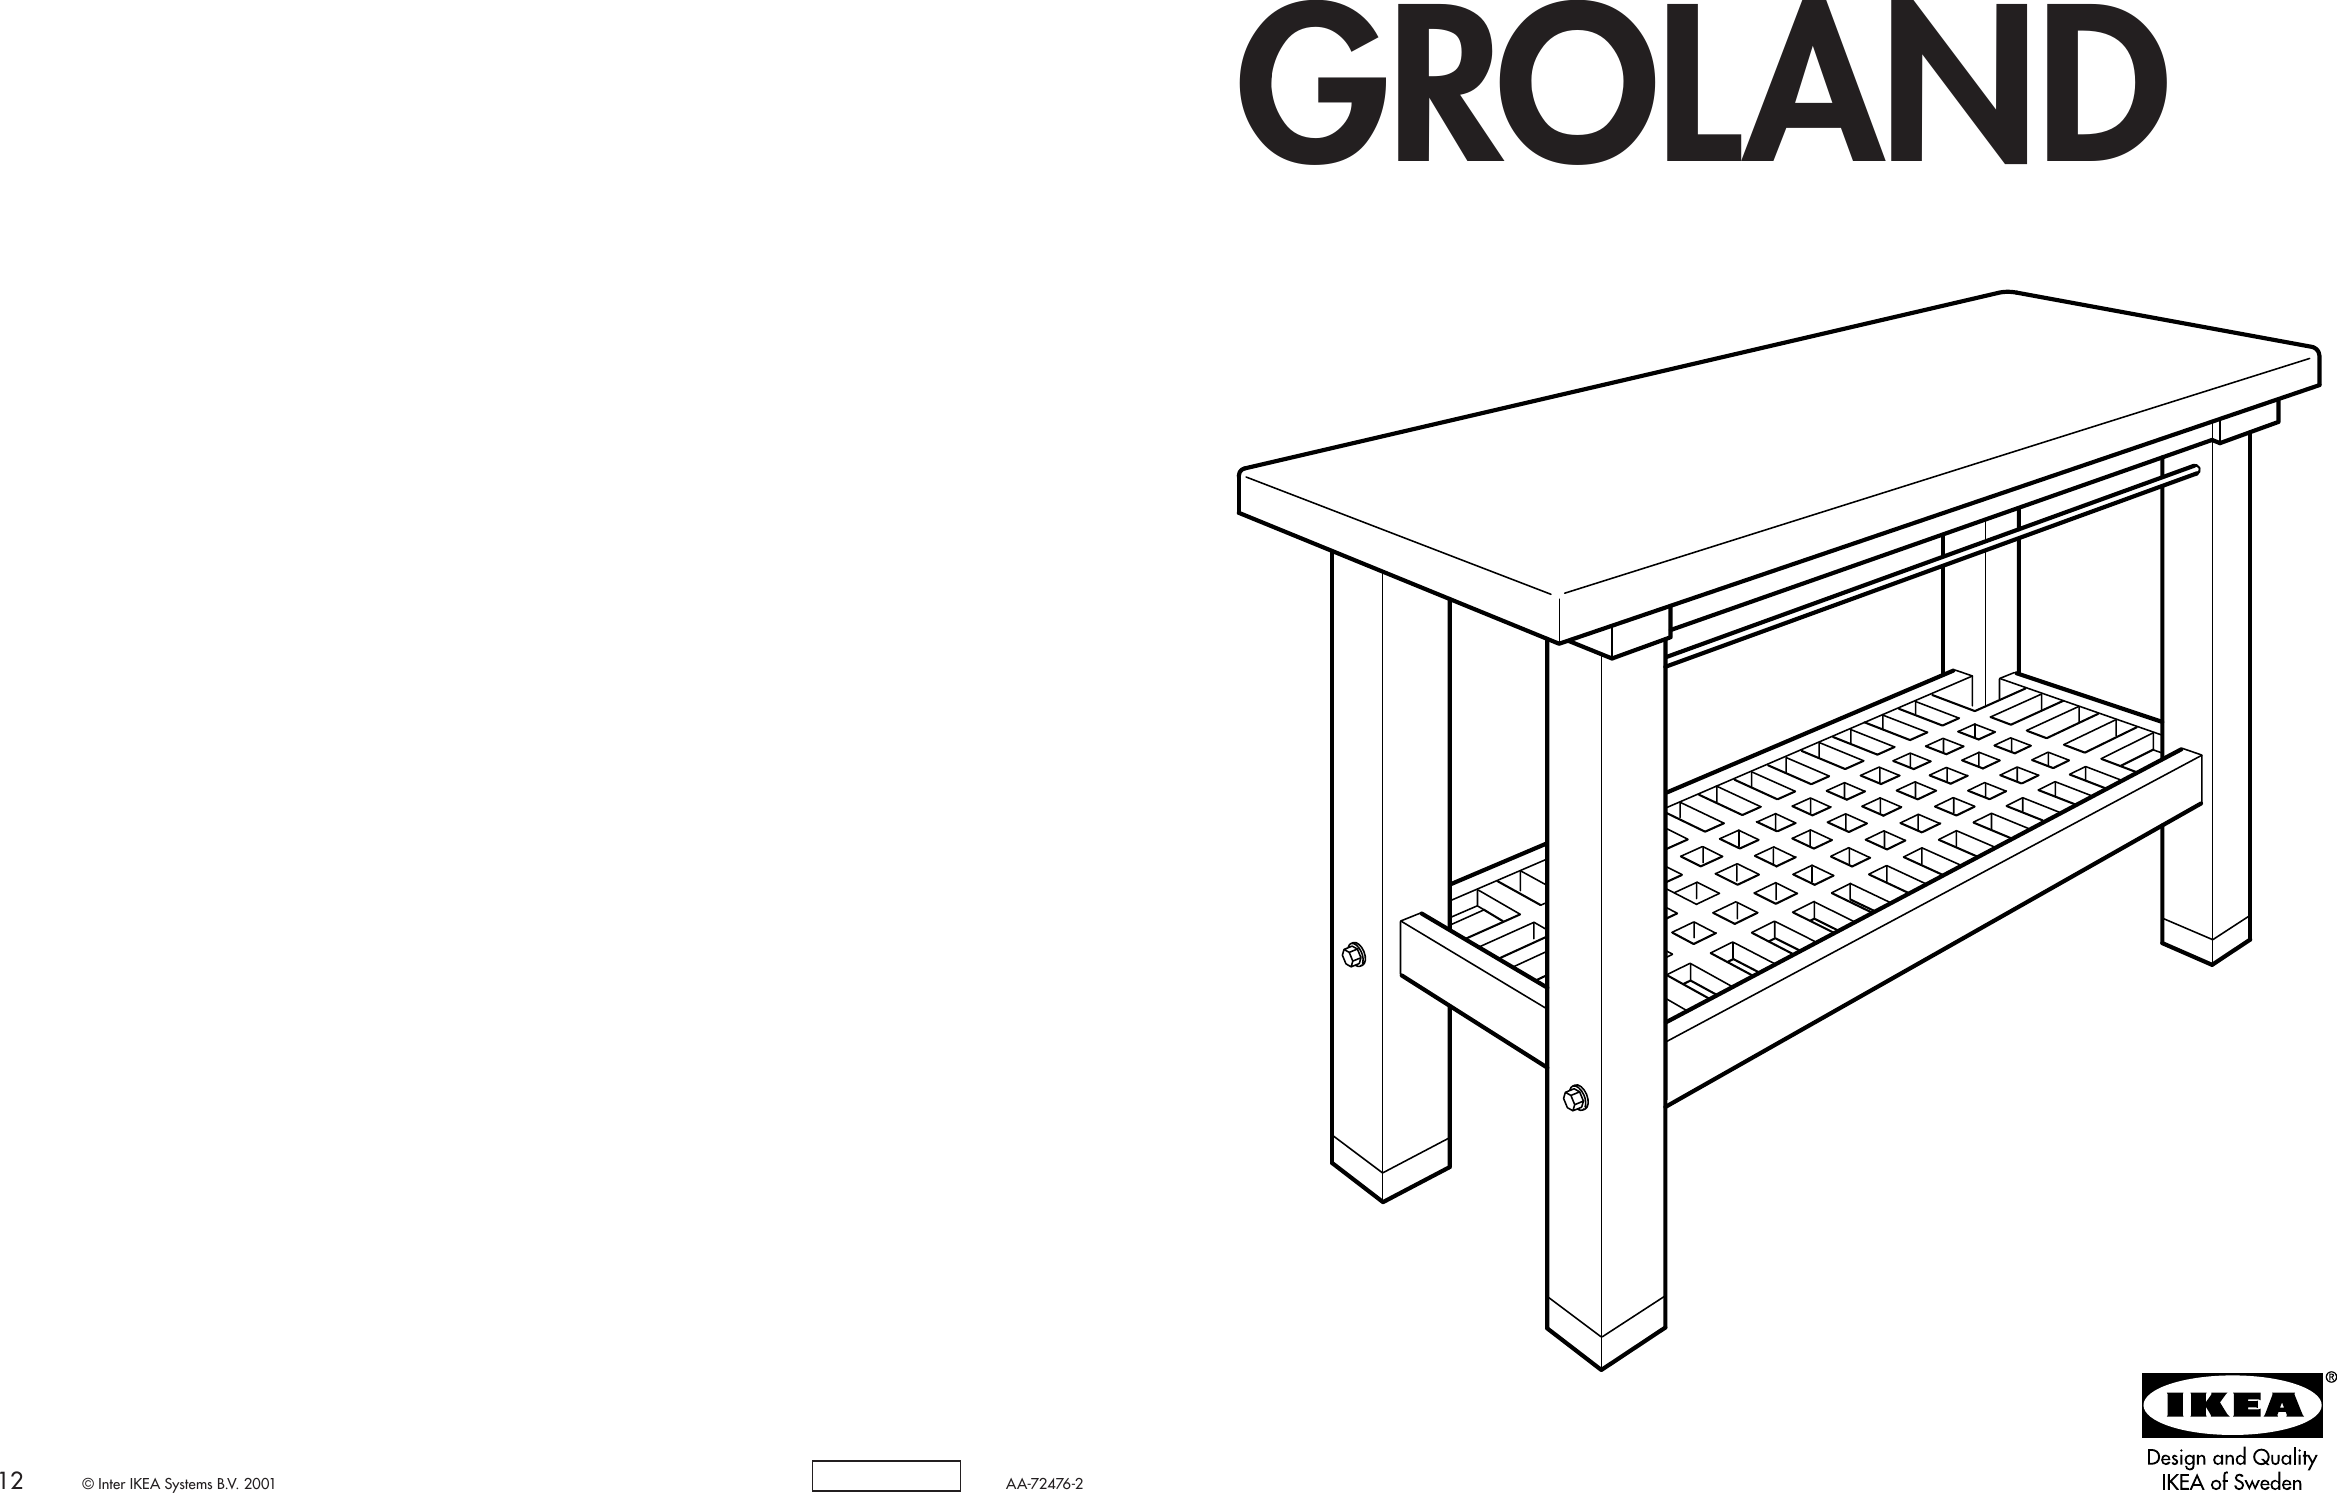 Page 1 of 6 - Ikea Ikea-Groland-Kitchen-Island-47X35-Assembly-Instruction 0